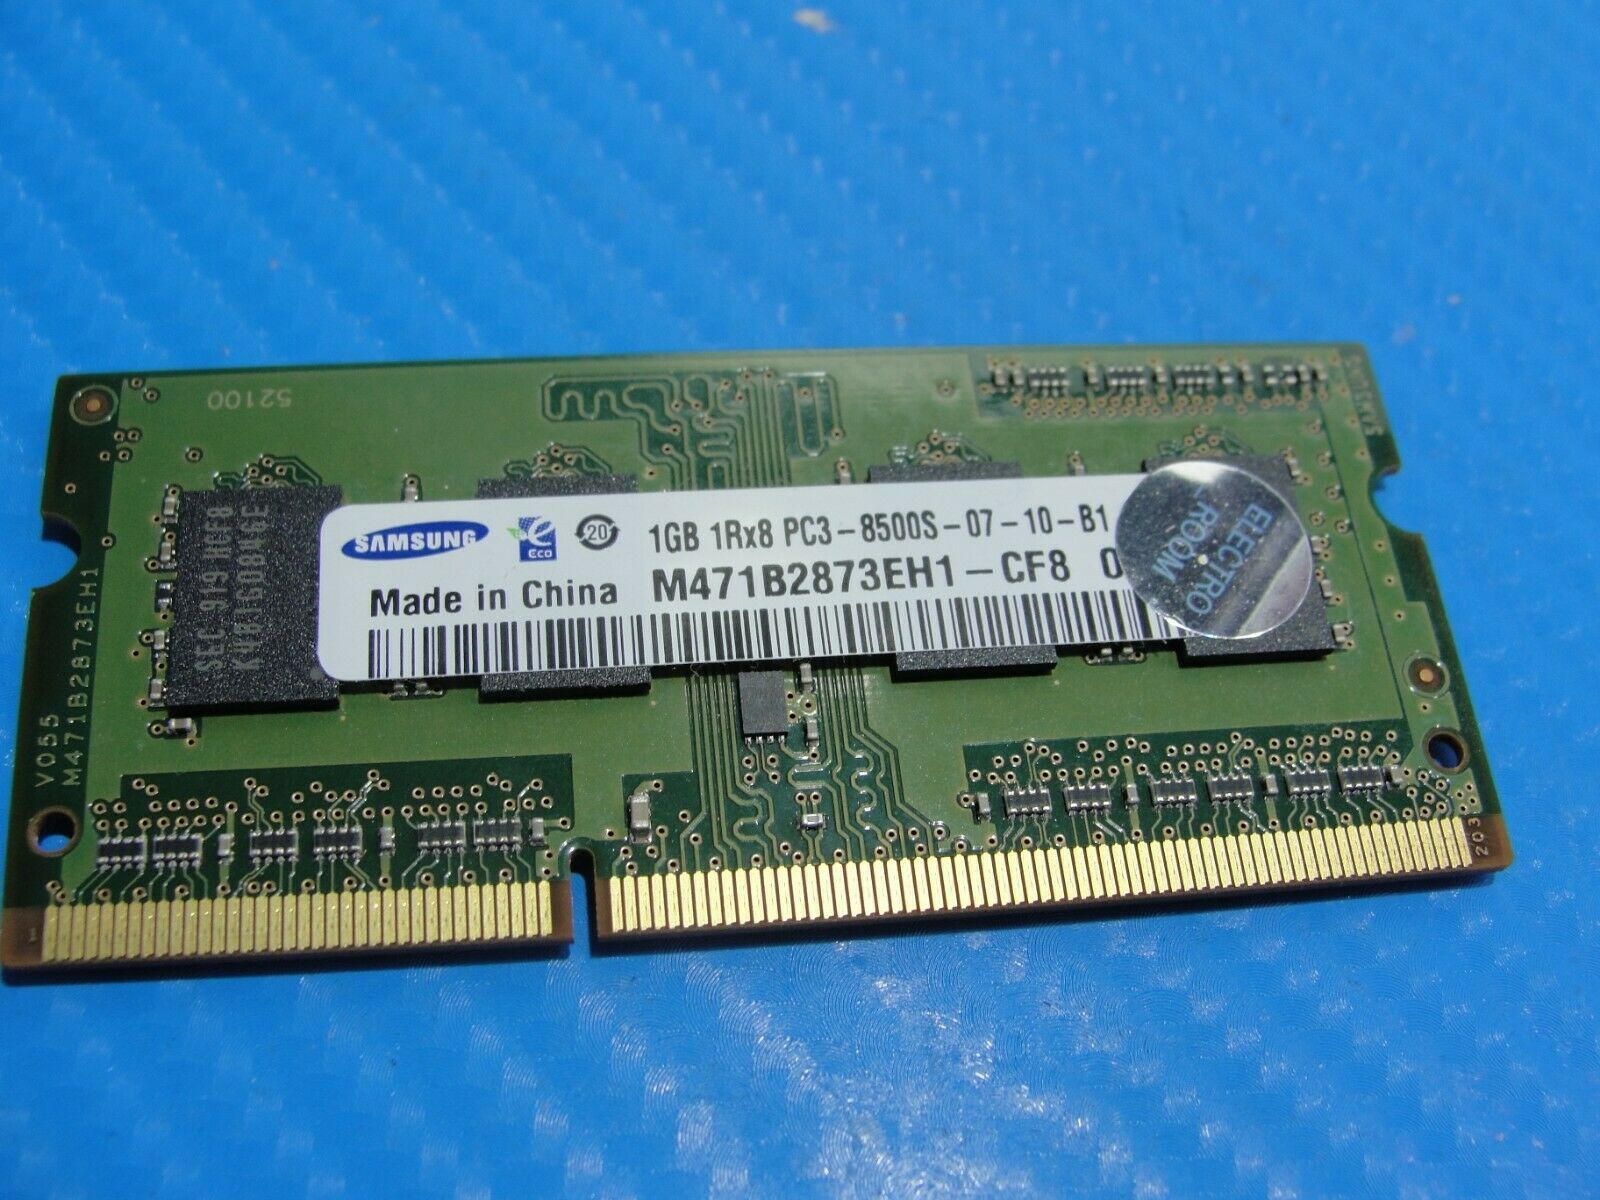 Macbook Pro A1278 Laptop Samsung 1GB Memory PC3-8500S-07-10-B1 M471B2873EH1-CF8 - Laptop Parts - Buy Authentic Computer Parts - Top Seller Ebay